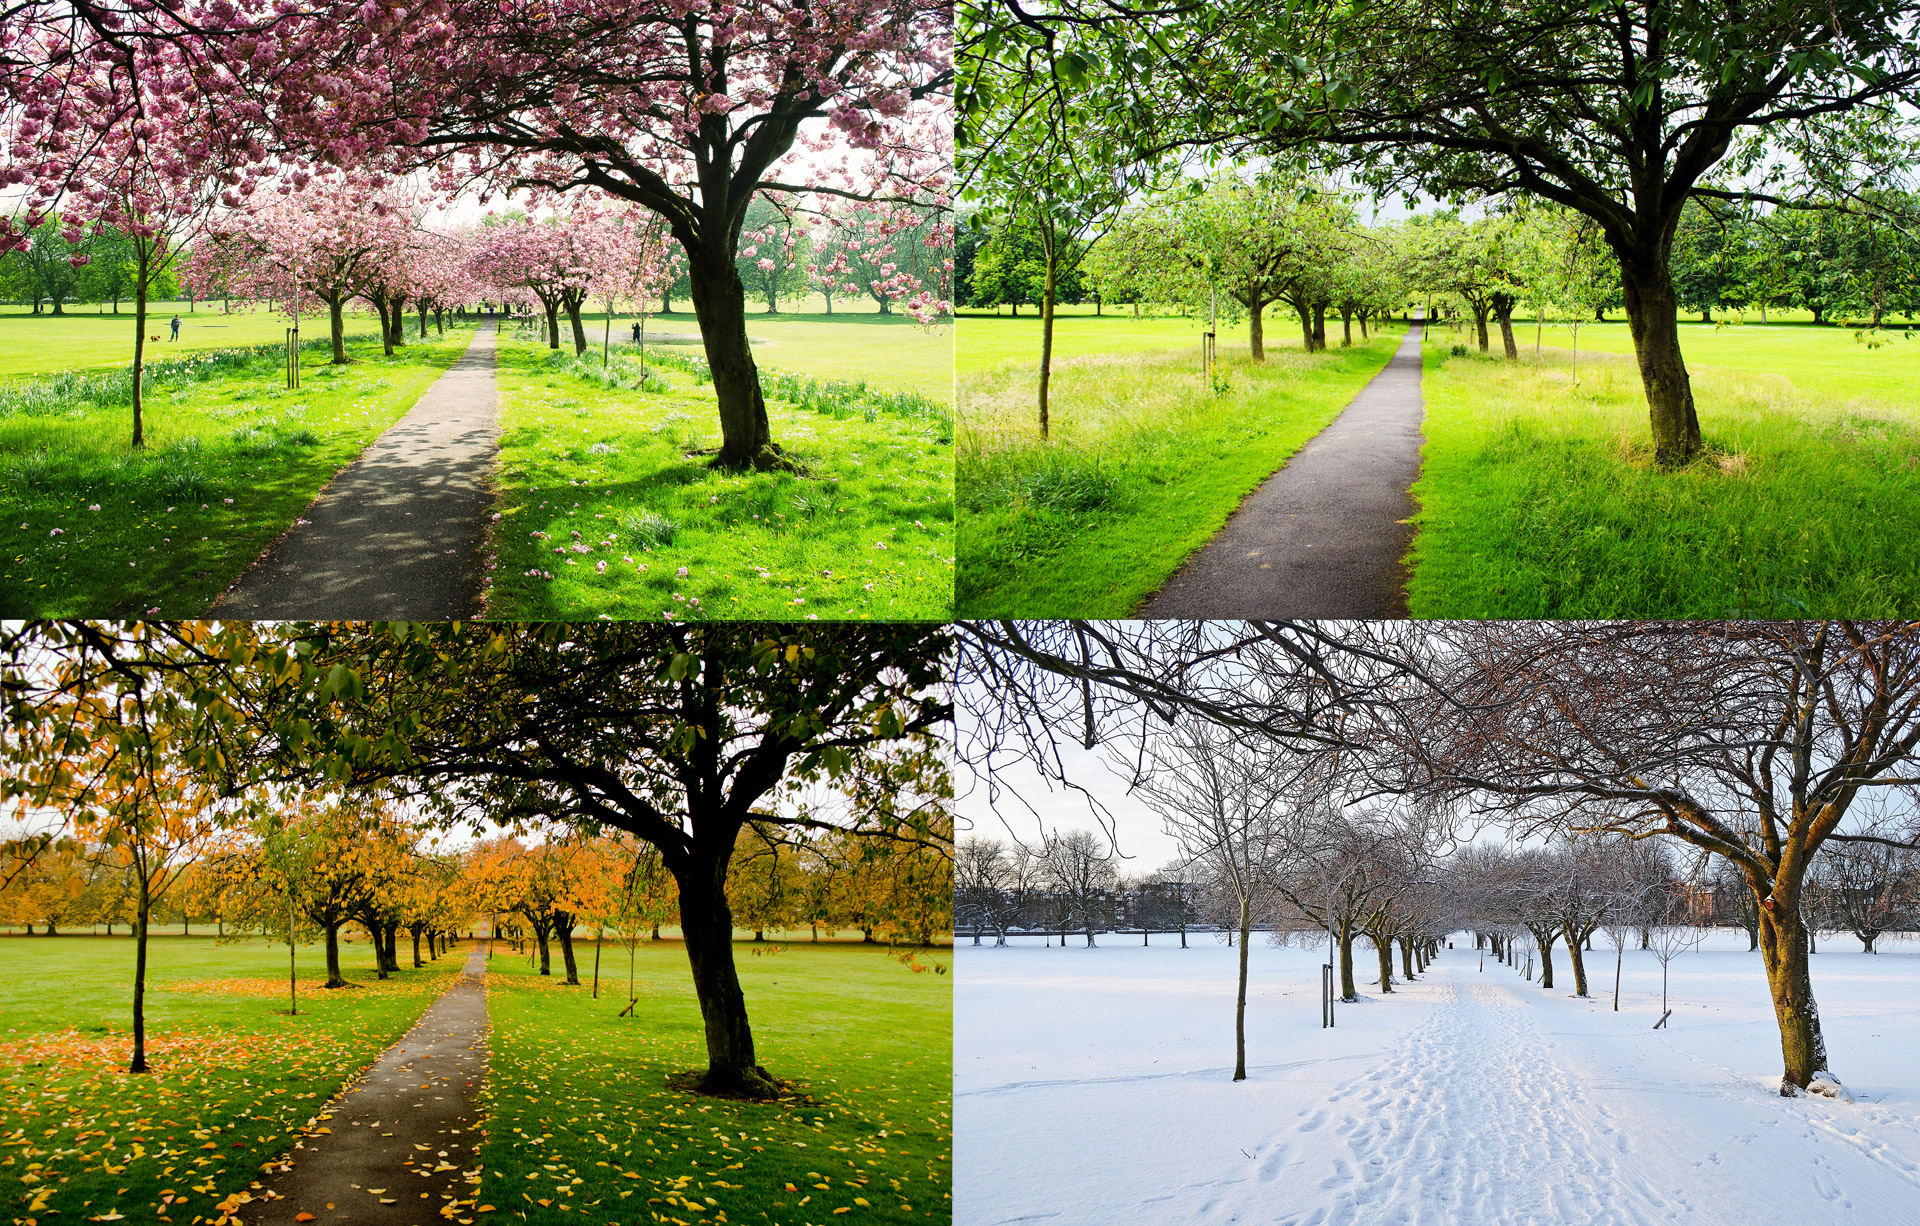 The seasons: spring, summer, fall, winter